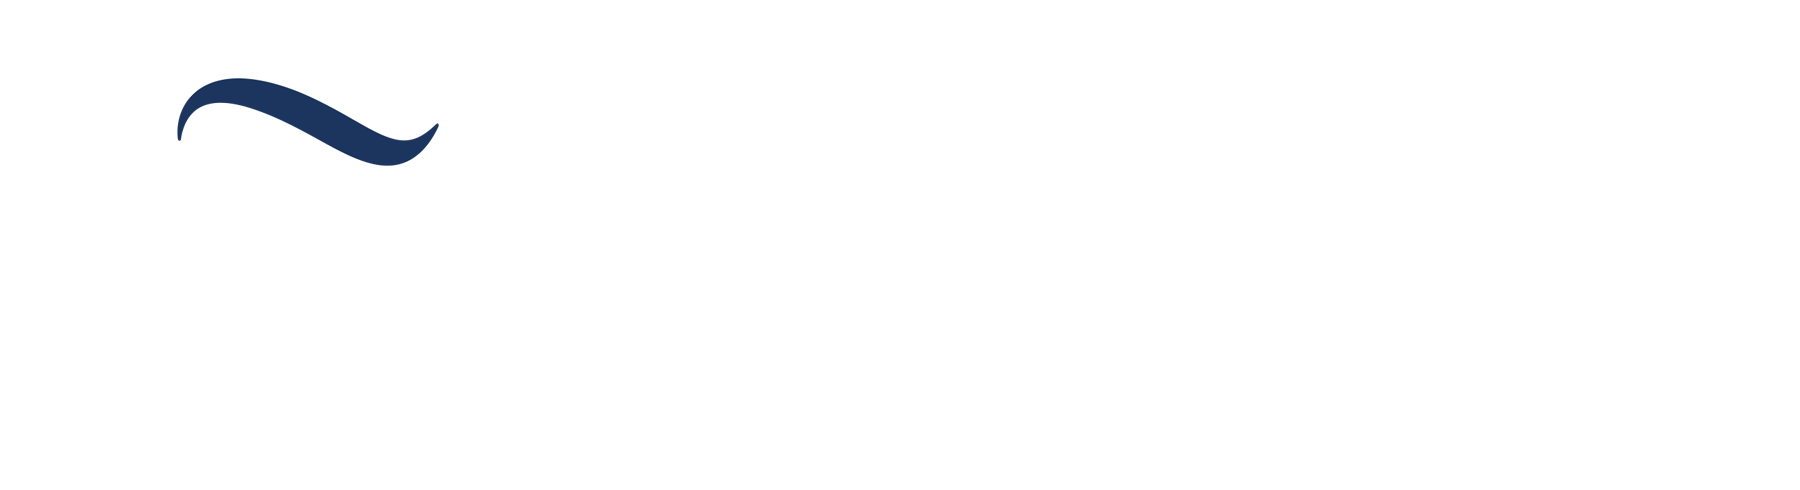 Illinois Principals Foundation